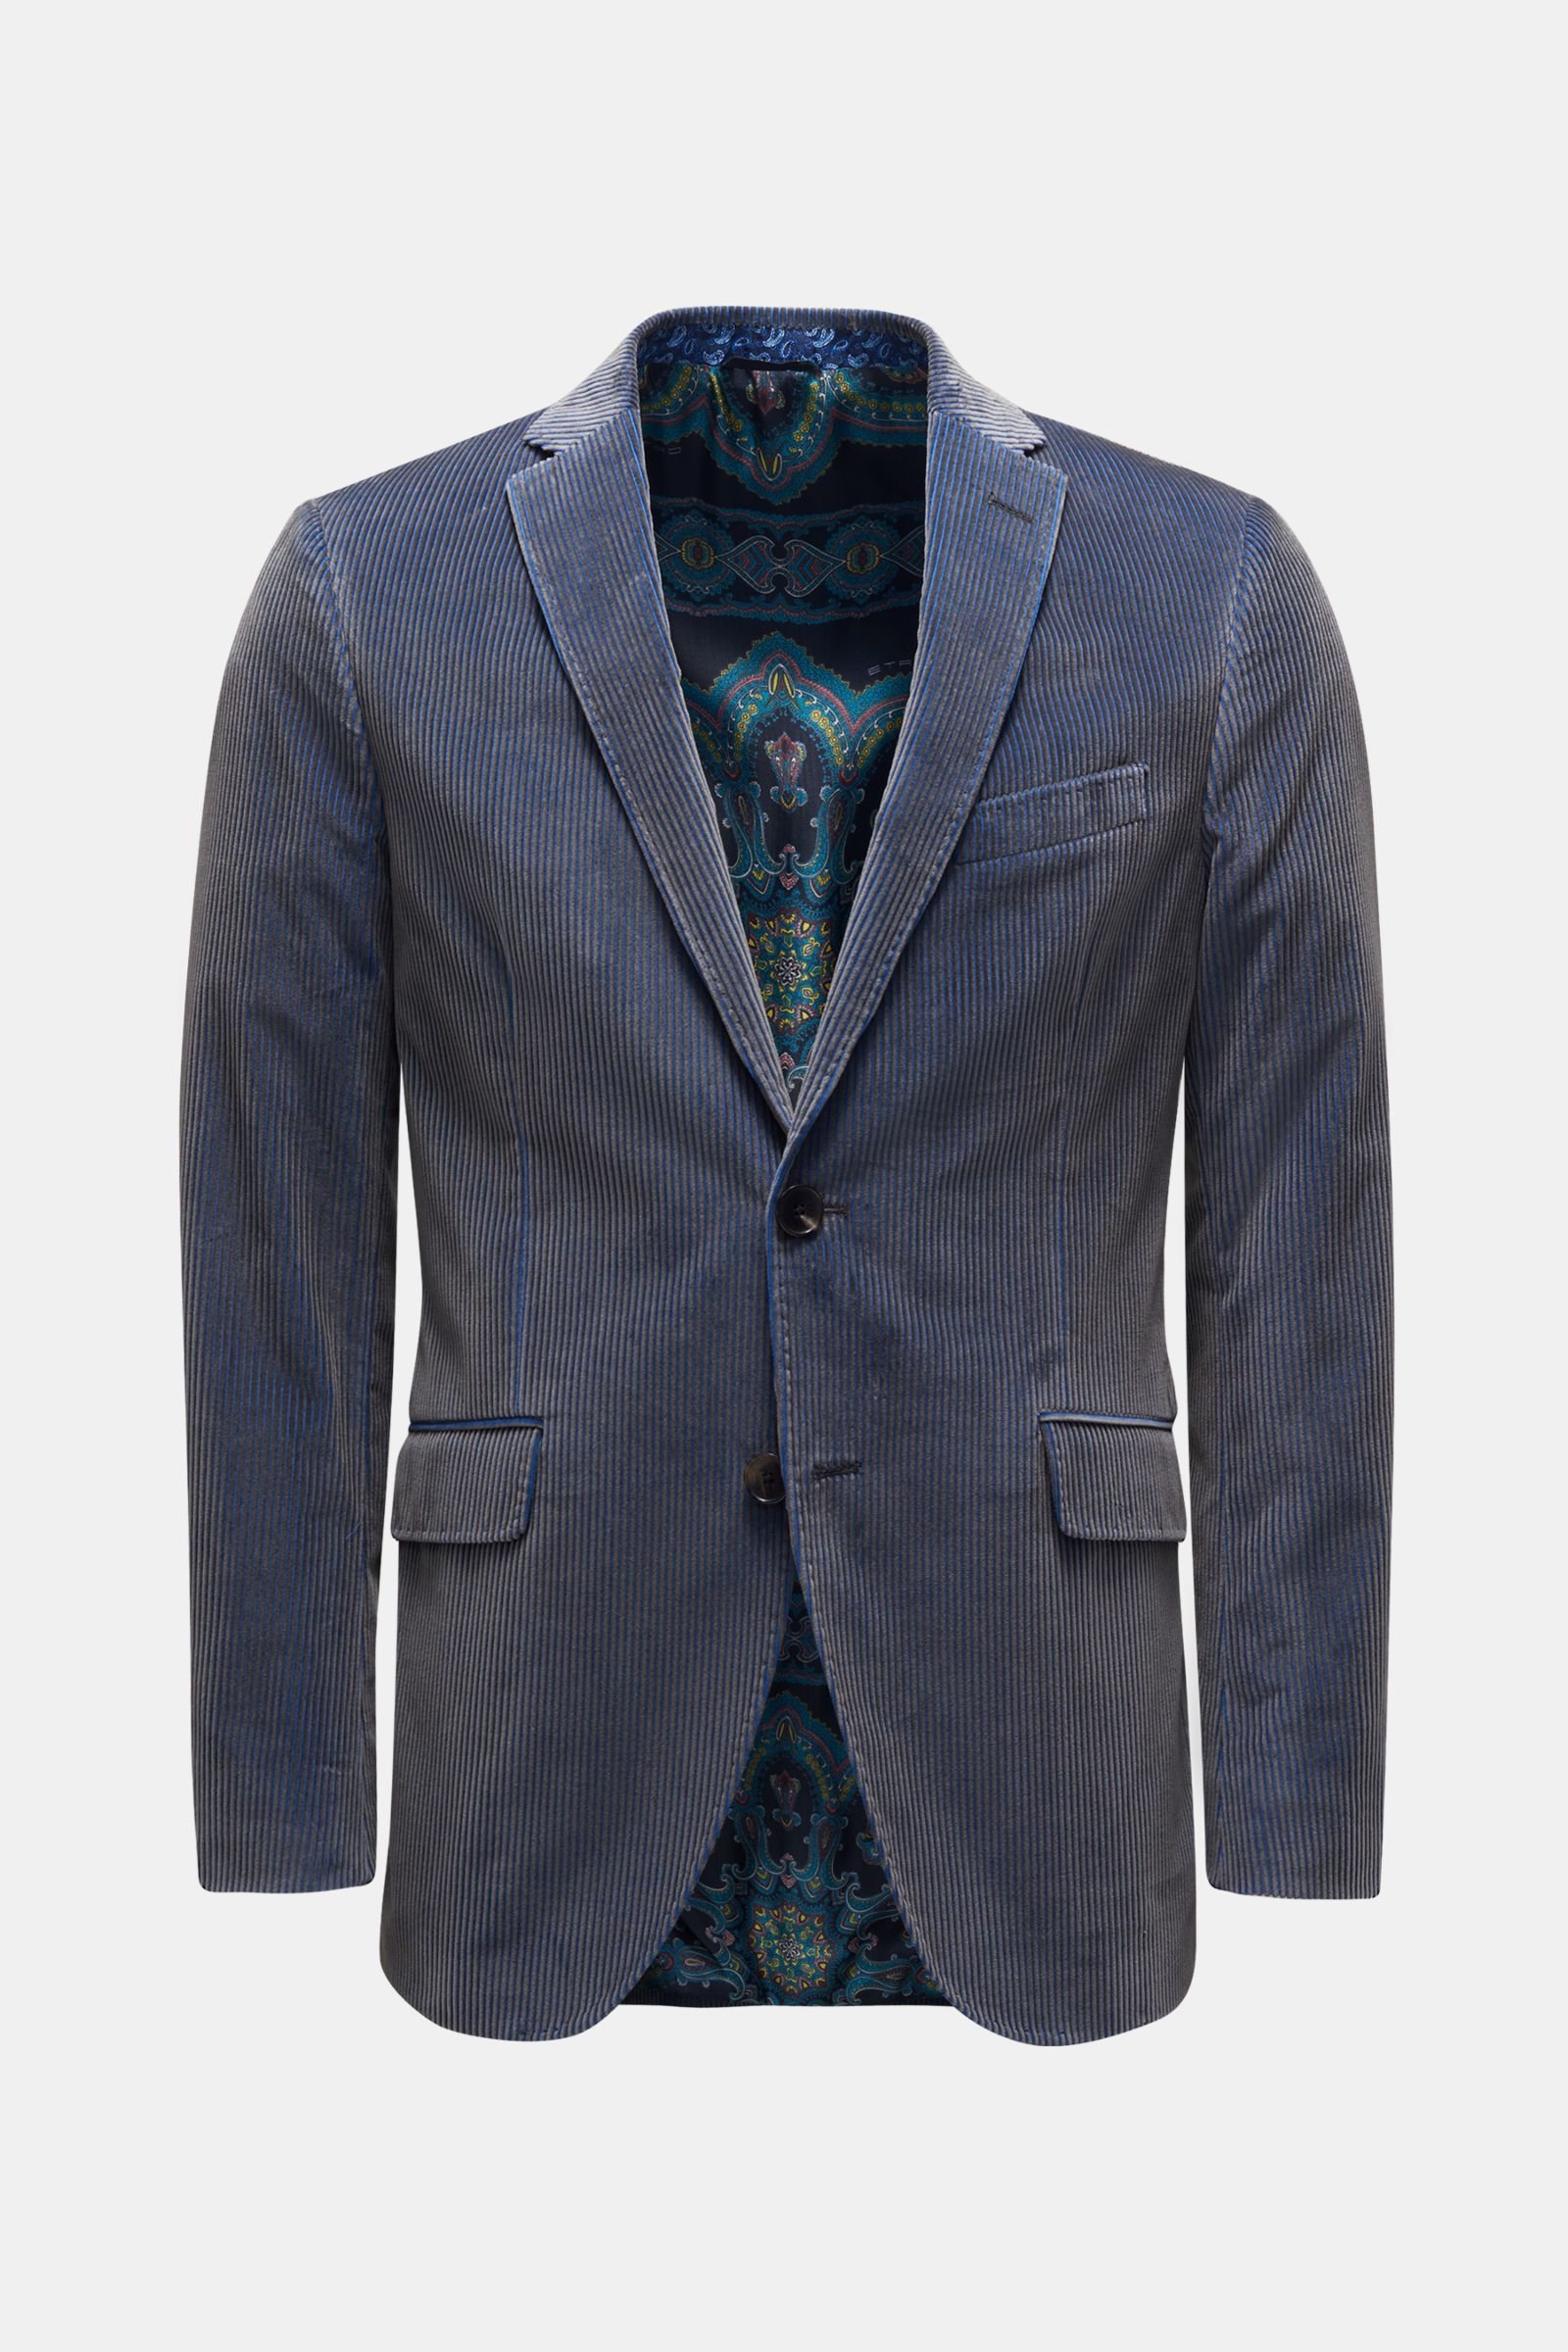 Corduroy jacket blue/grey 